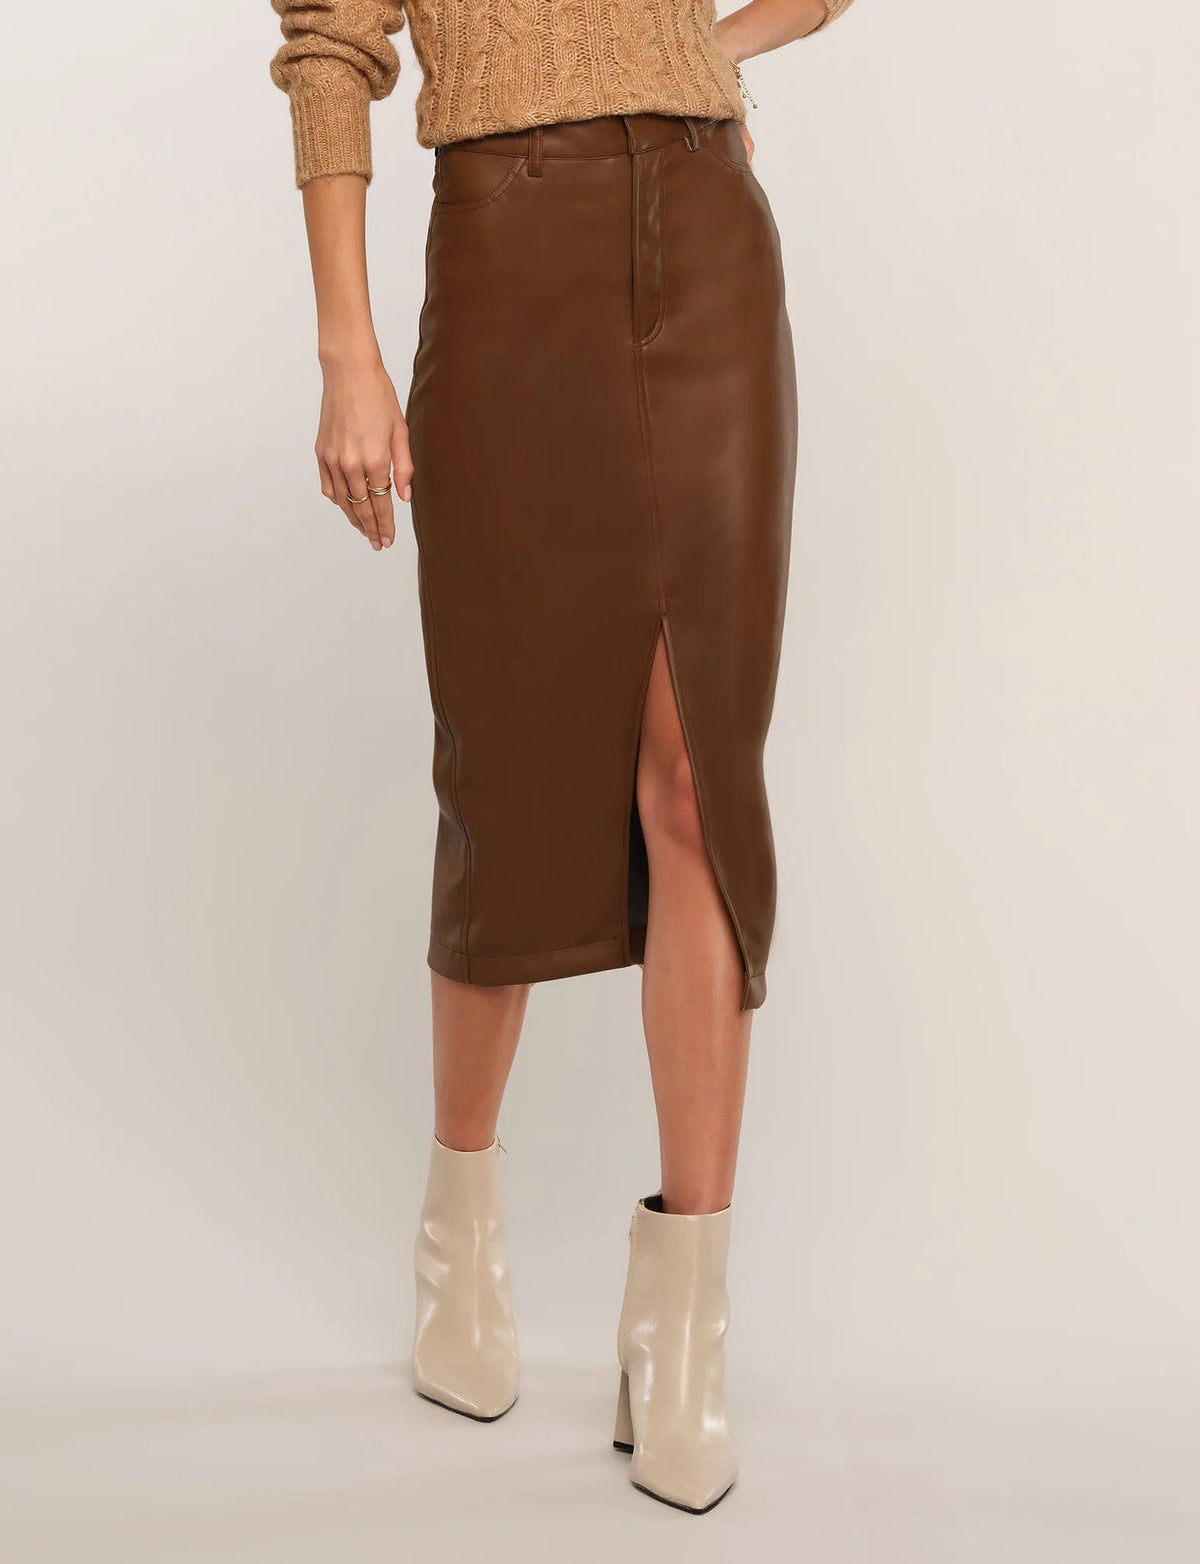 Faux Leather Heartloom Jae Midi Skirt in Mocha Brown